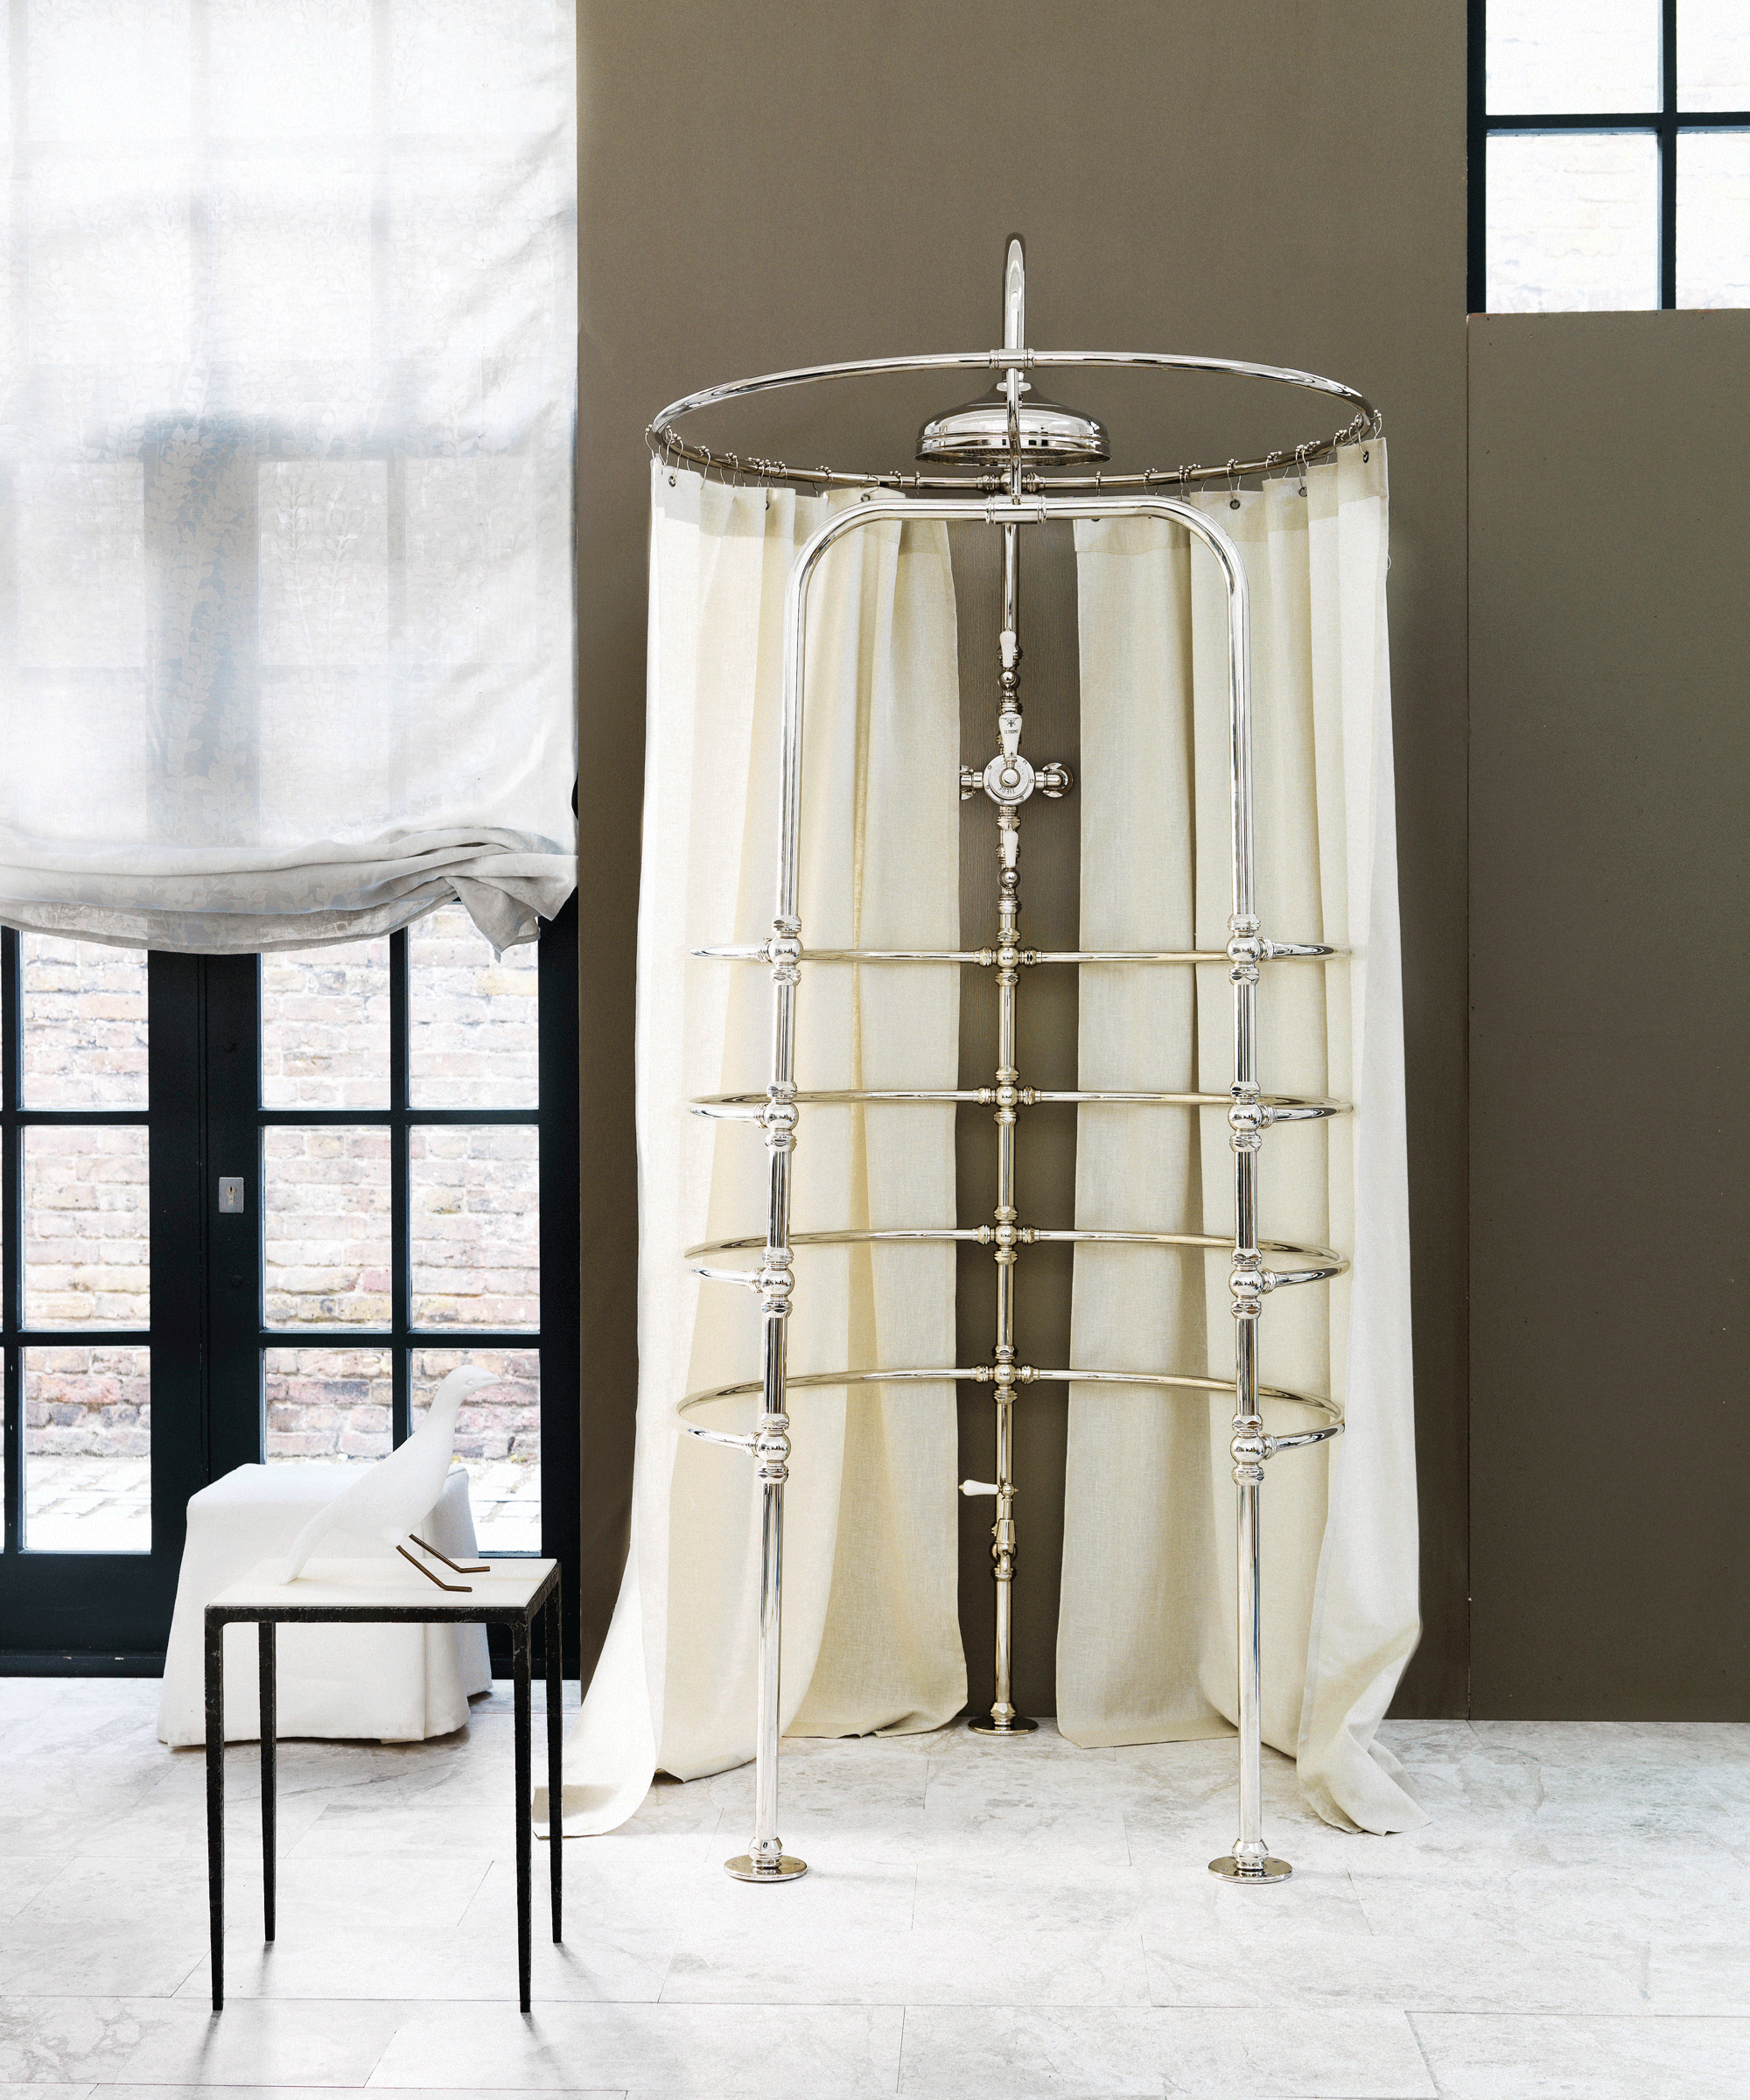 Vintage style shower curtain over round shower